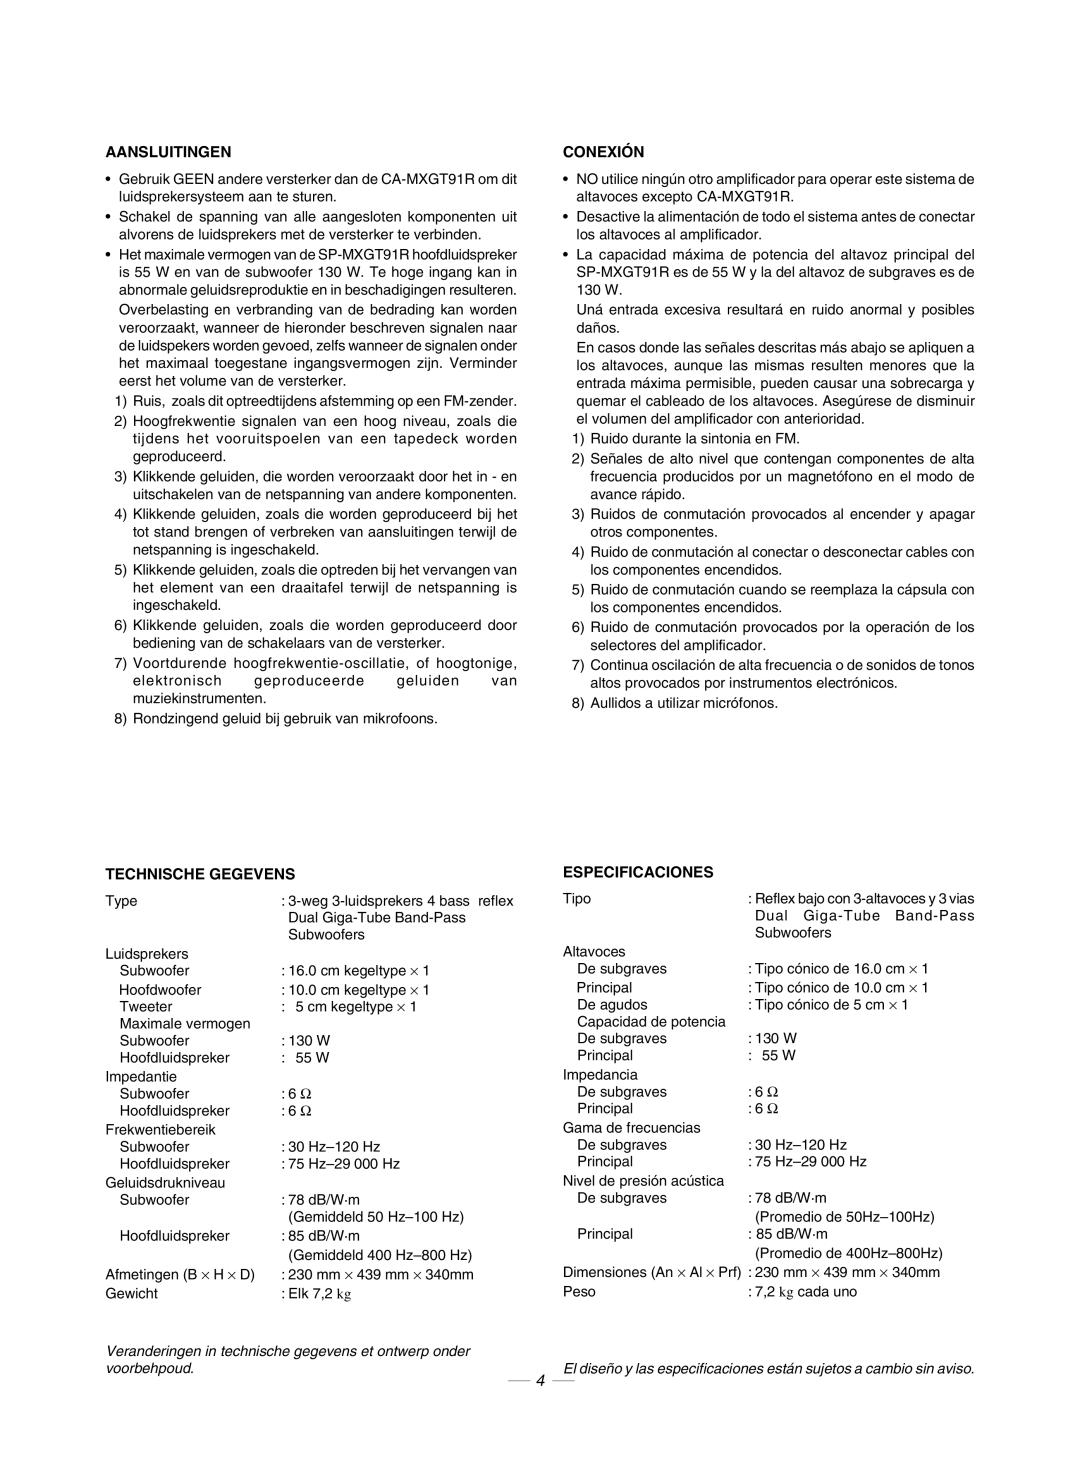 JVC CA-MXGT91R manual Aansluitingen, Conexión, Technische Gegevens, Especificaciones 